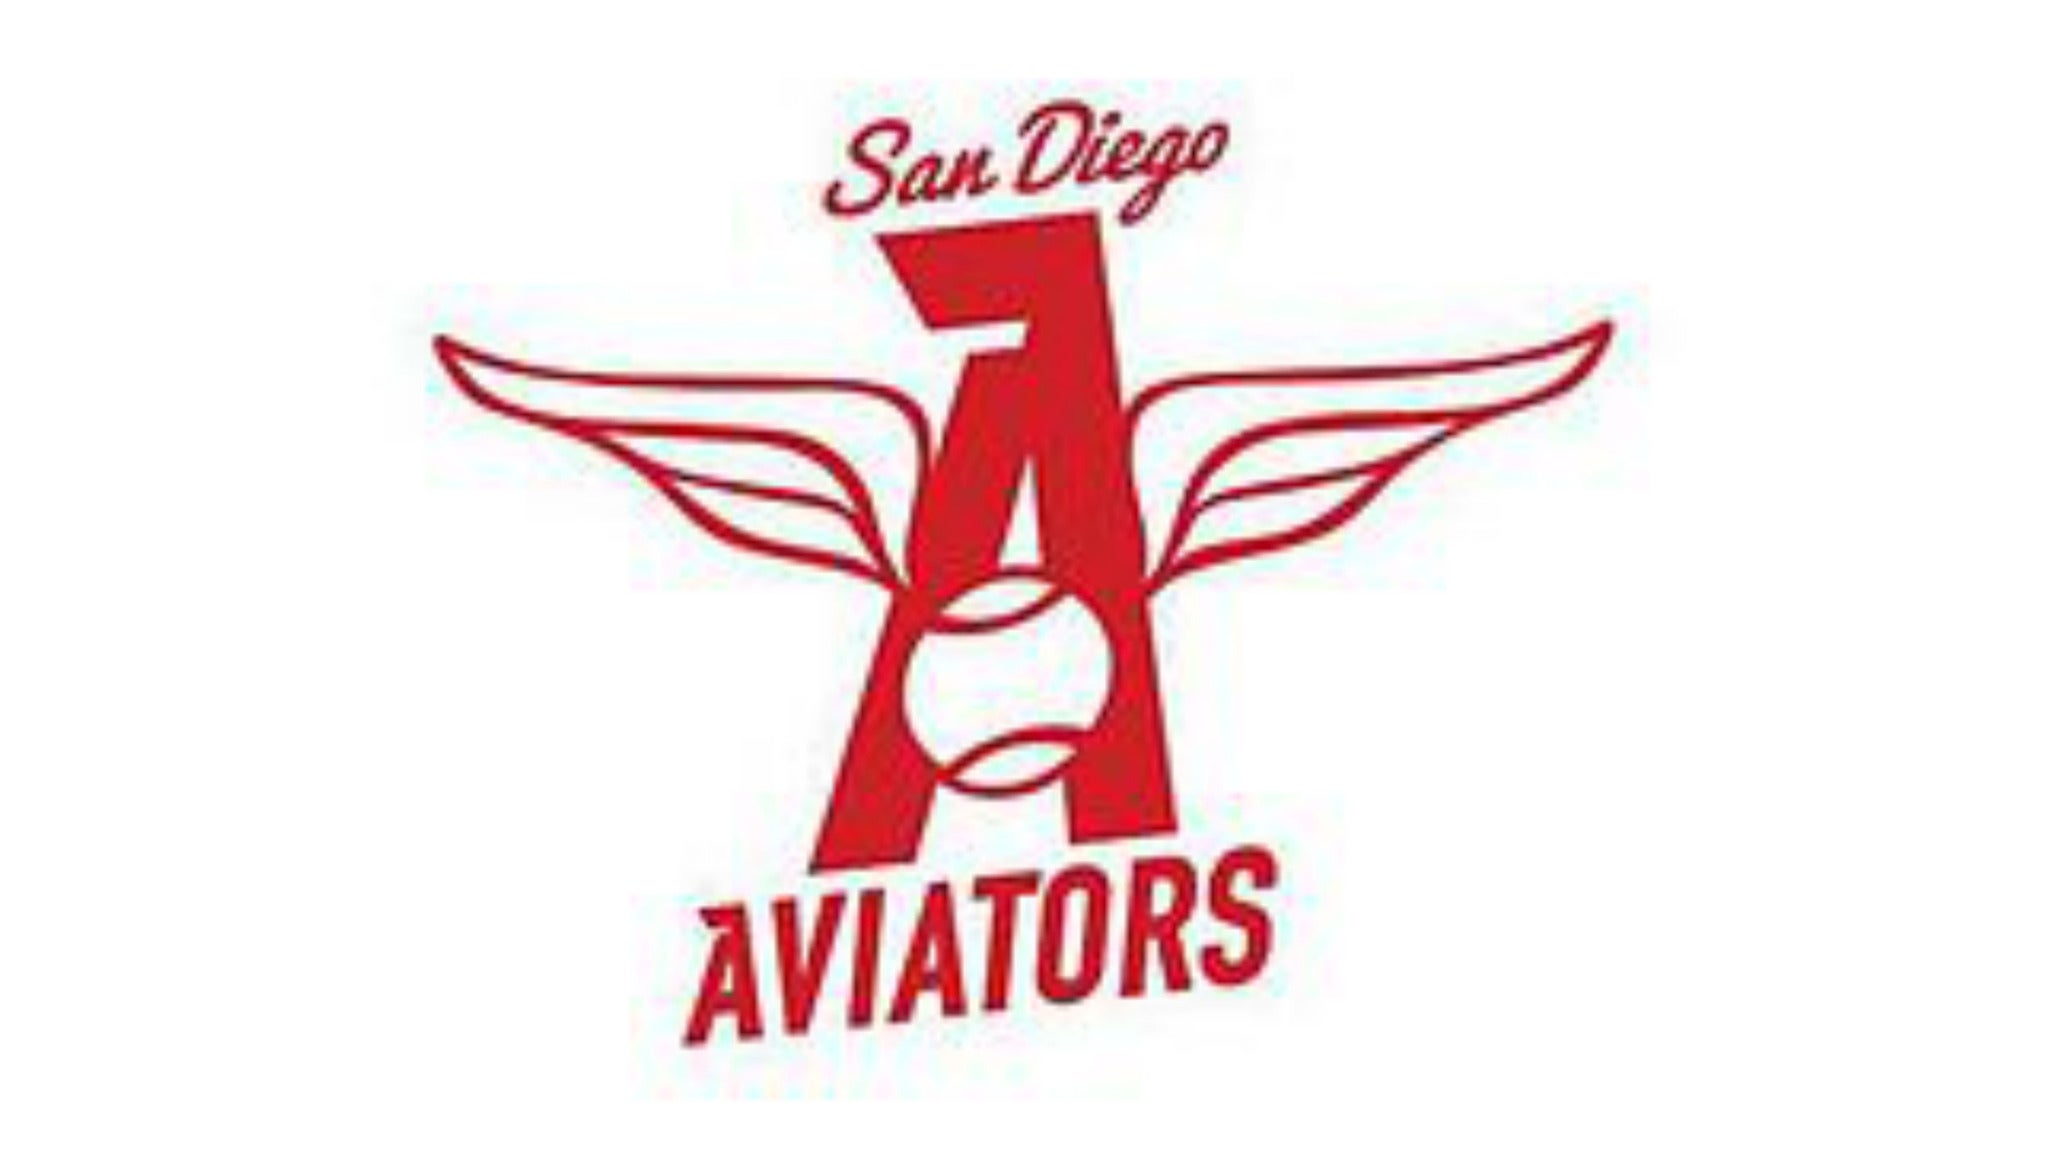 San Diego Aviators presale information on freepresalepasswords.com